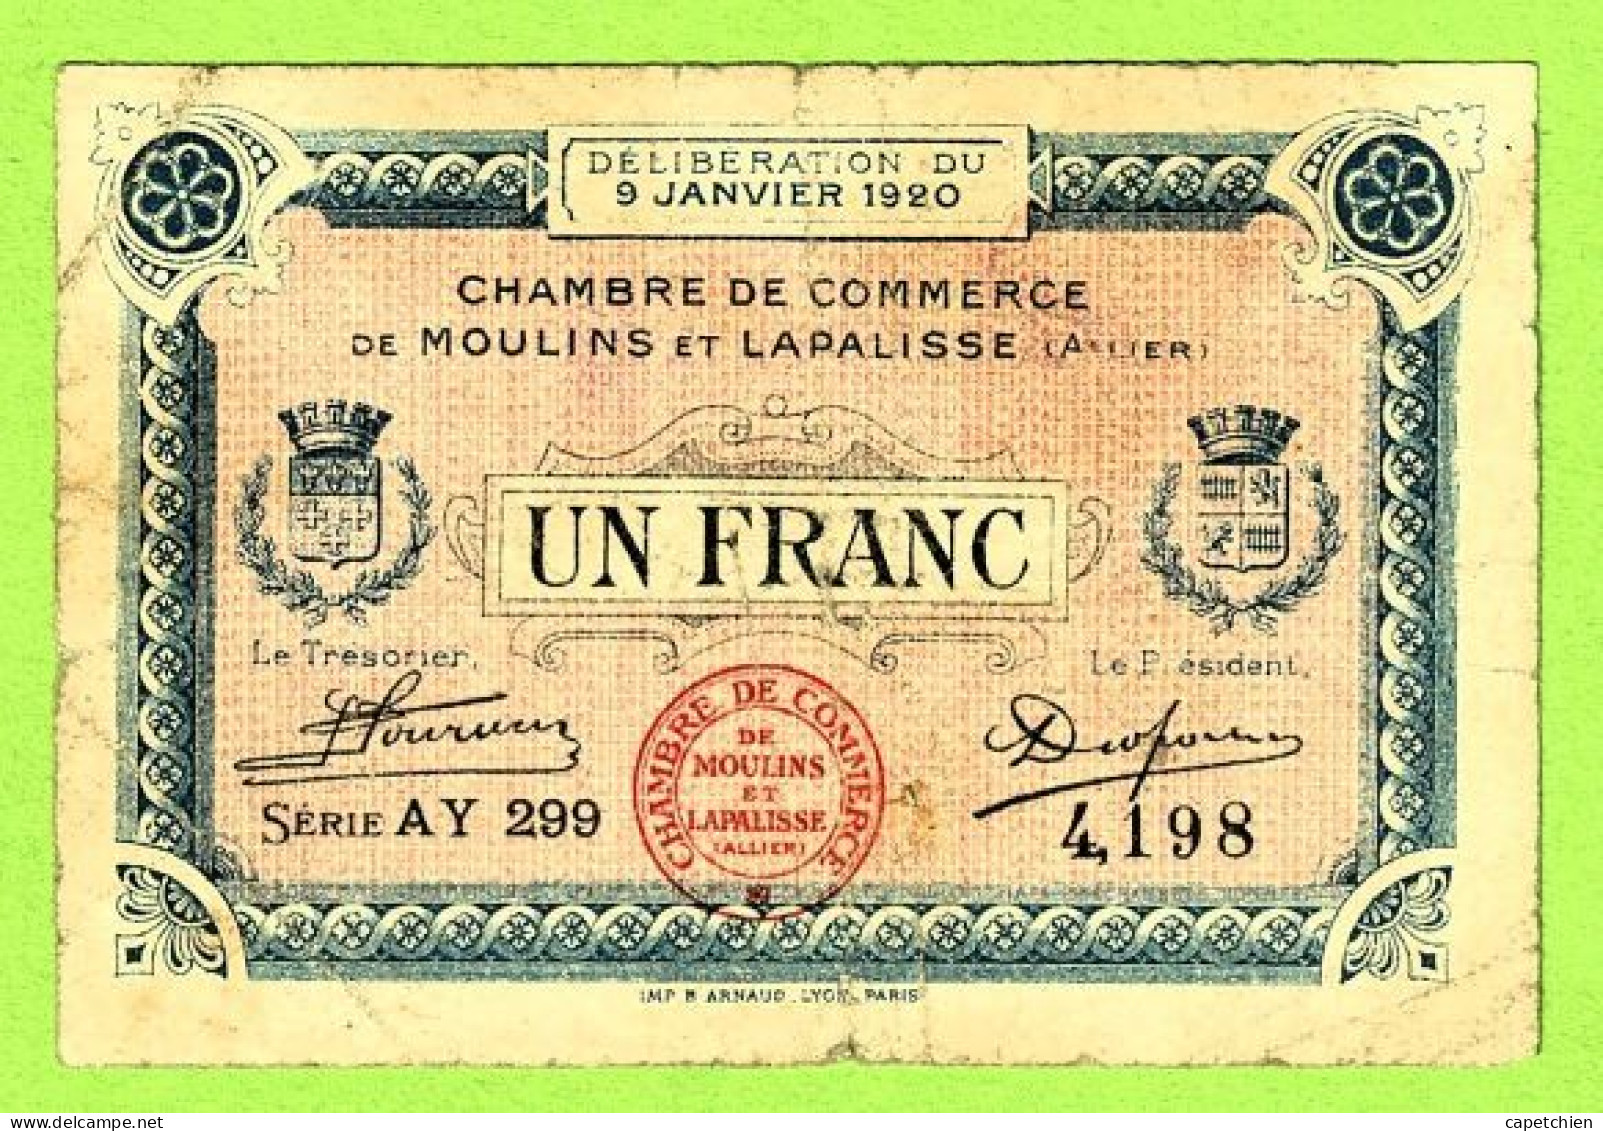 FRANCE /  CHAMBRE De COMMERCE De MOULINS & LAPALISSE / 1 FRANC / 9 JANVIER 1920  N° 4,198 / SERIE AY 299 - Handelskammer